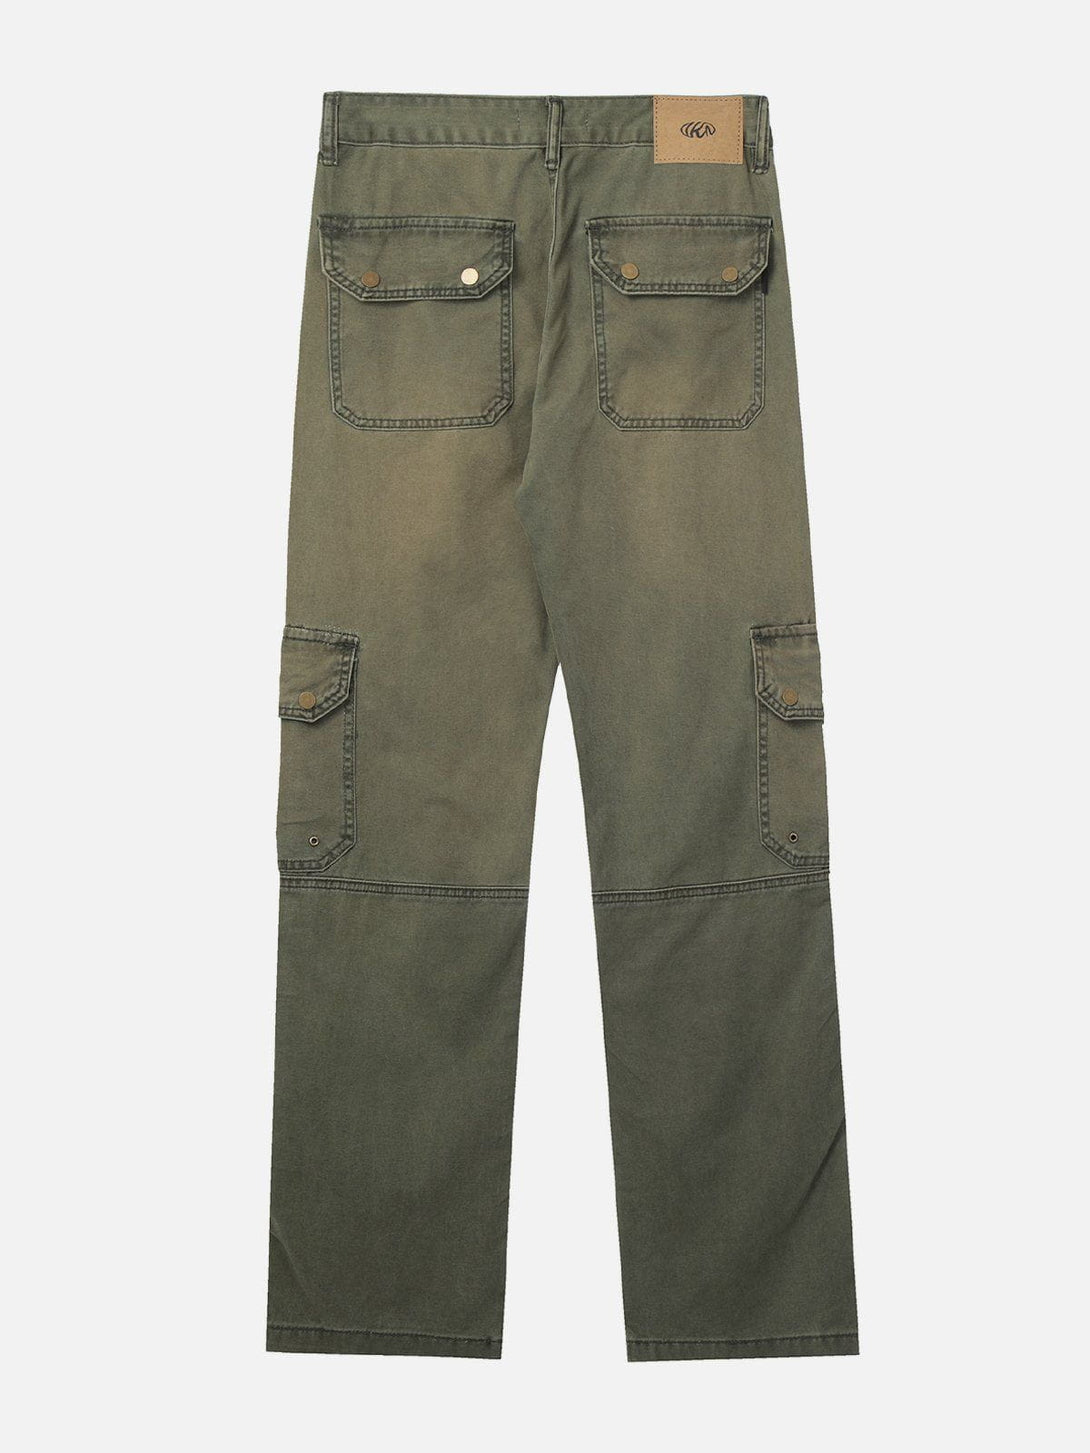 Levefly - Vintage Wash Gradient Jeans - Streetwear Fashion - levefly.com